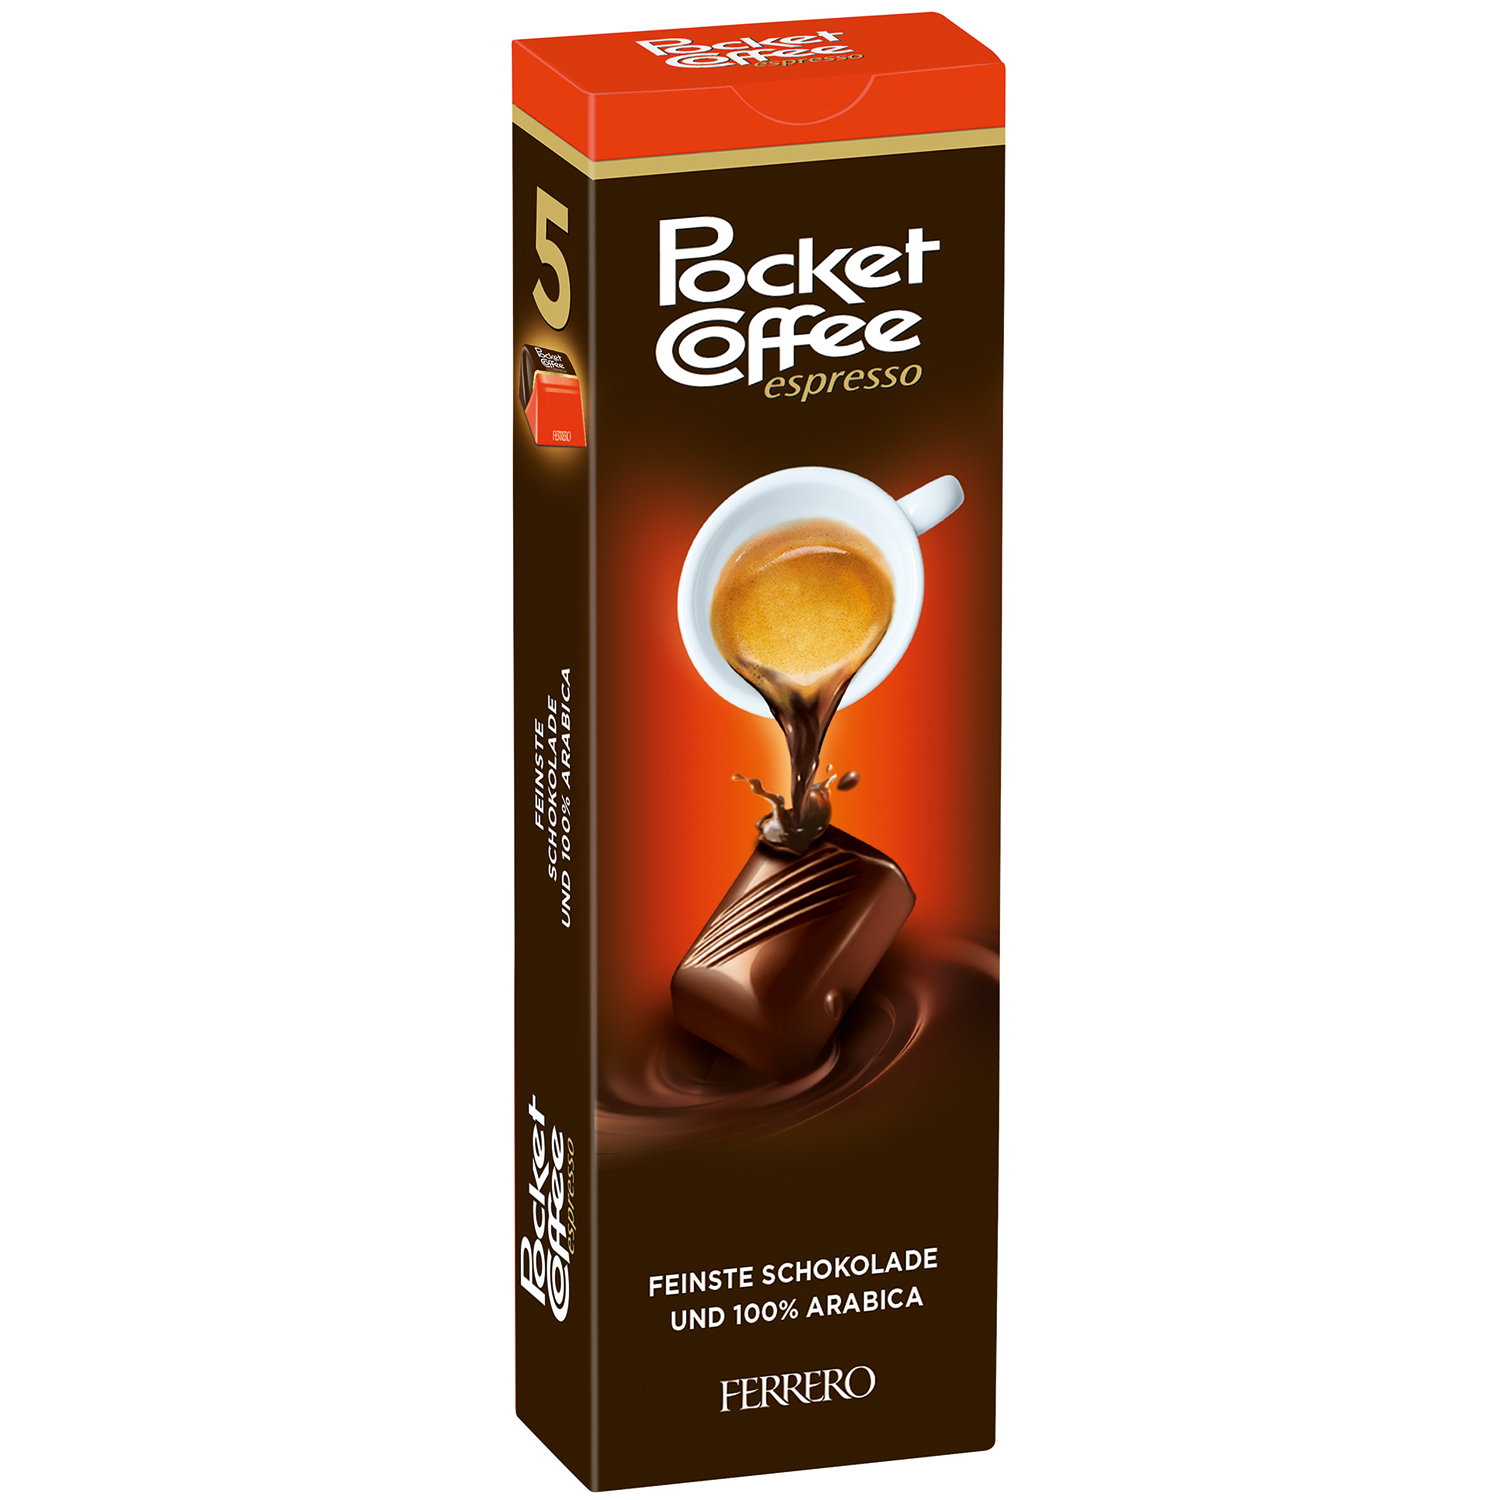 Ferrero Pocket Coffee Espresso 5 ks, 62g